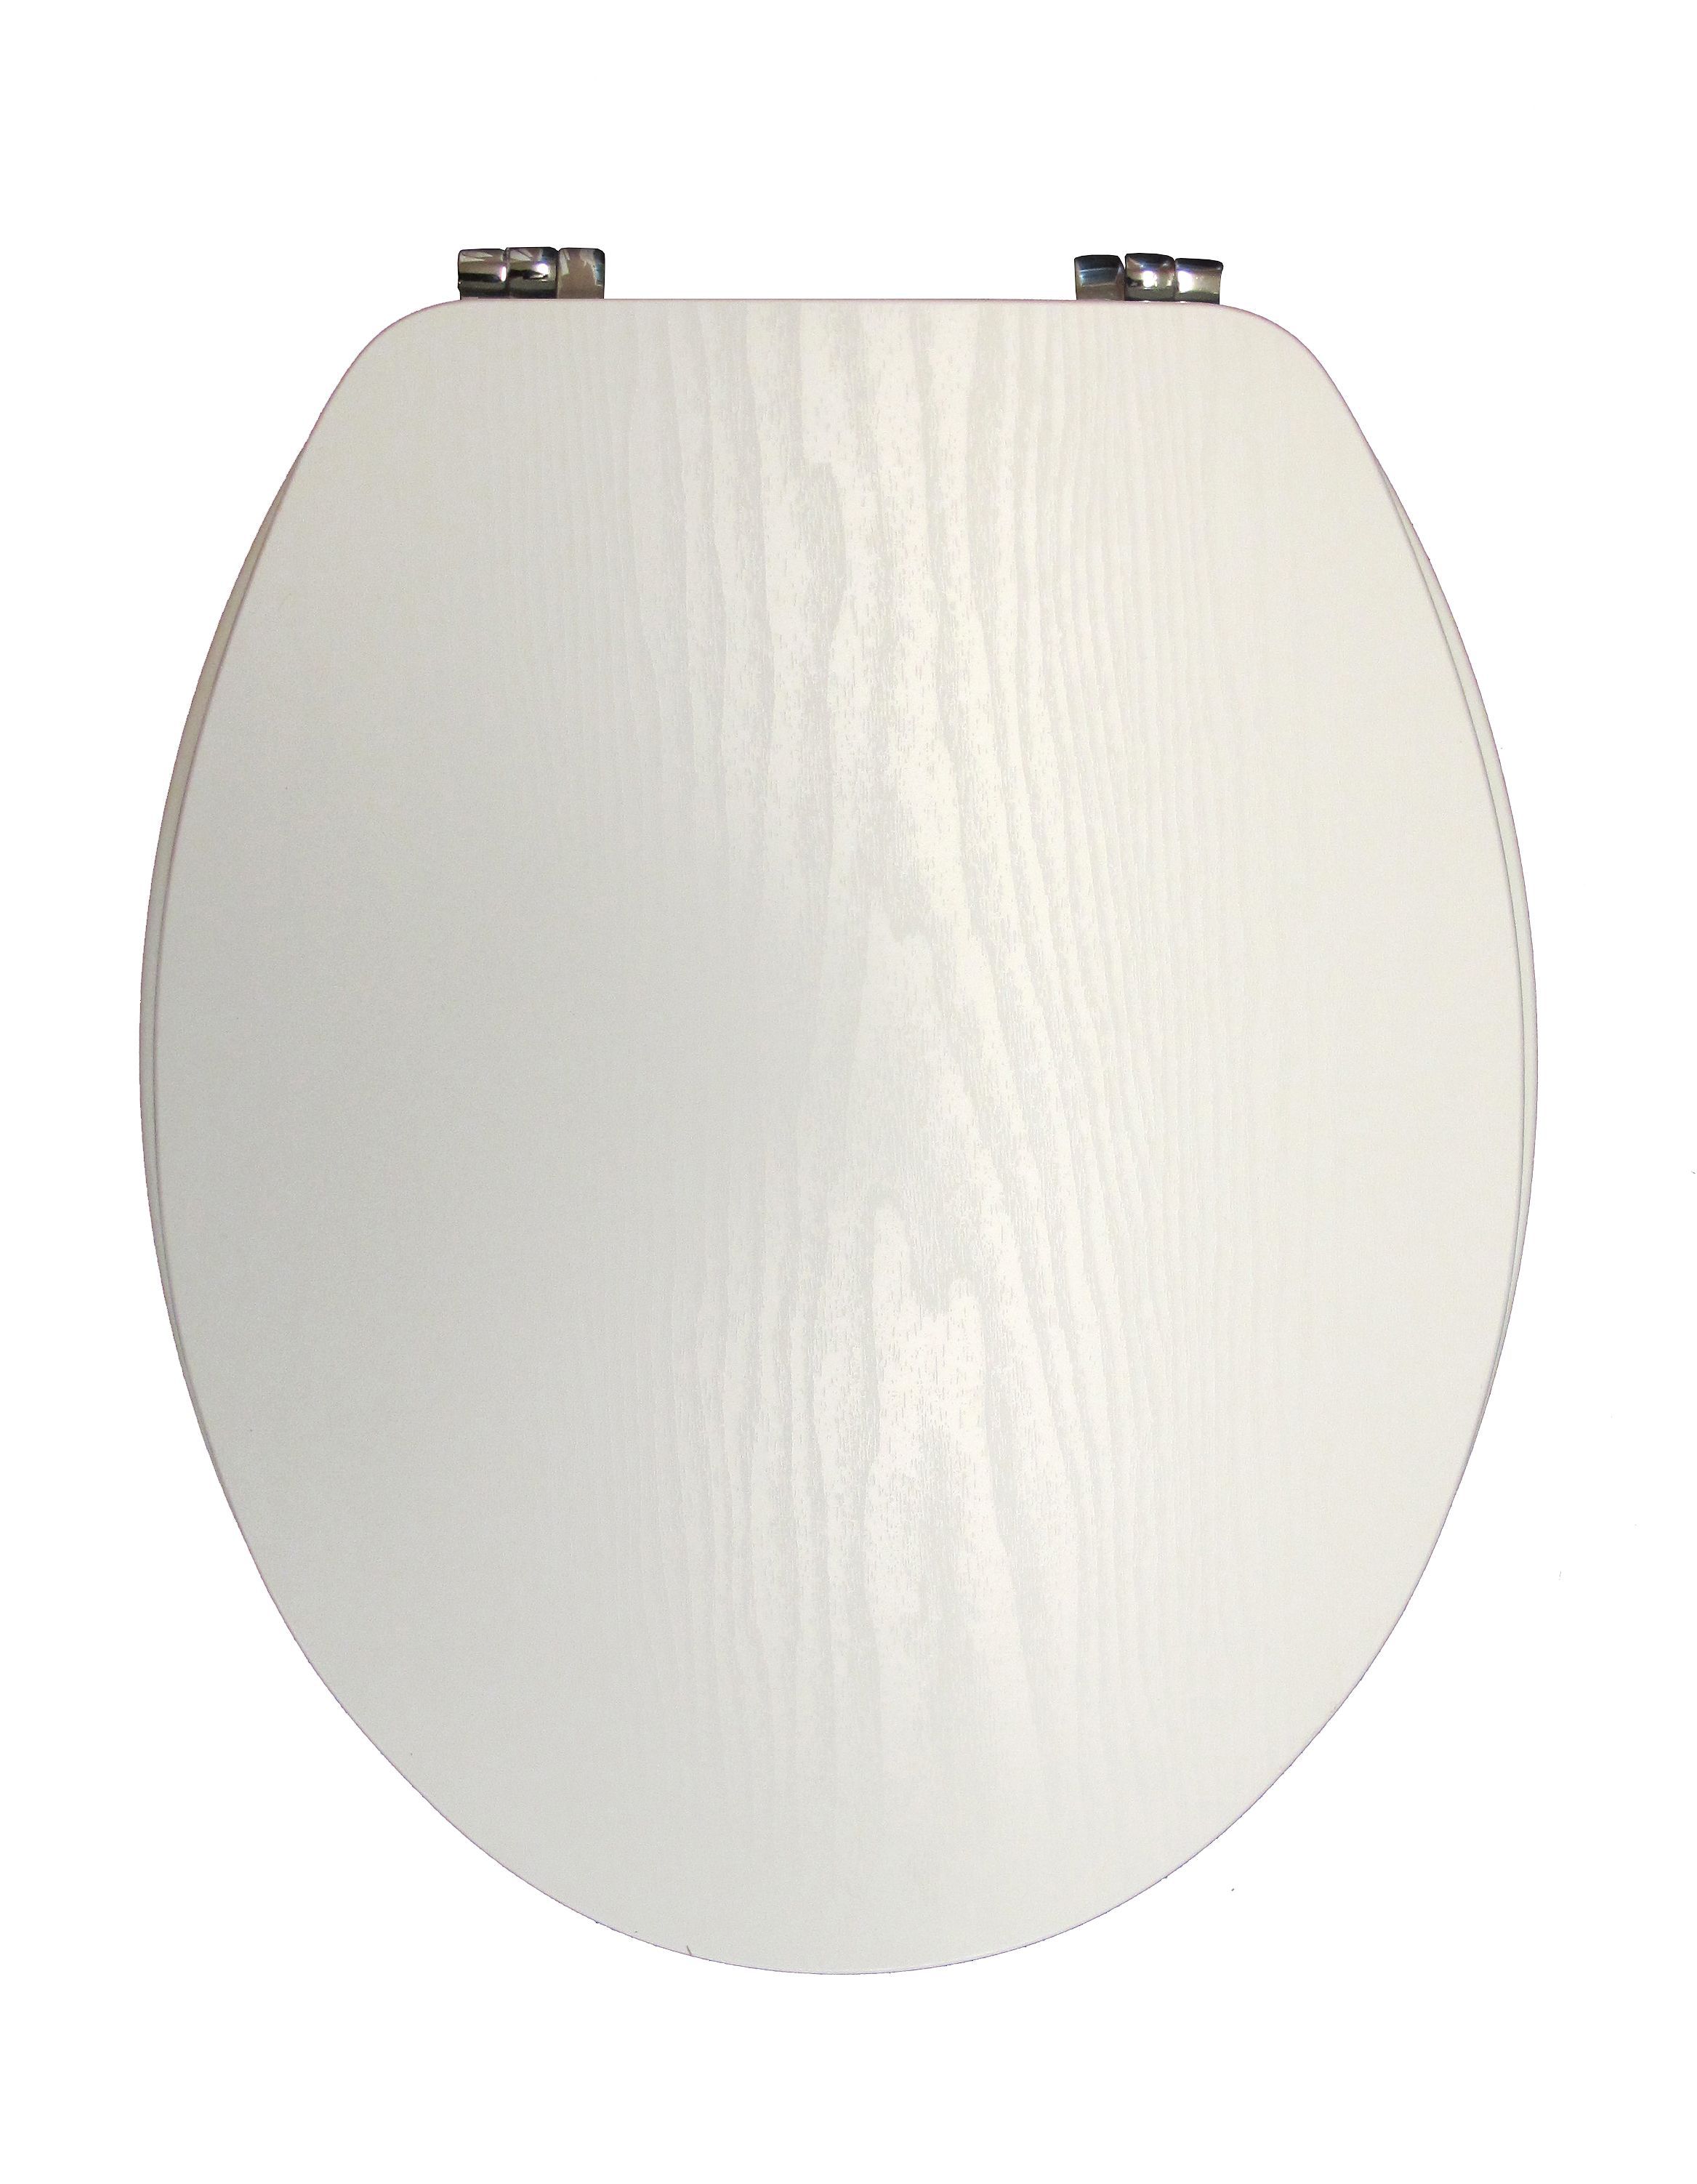 Cooke & Lewis Diani Grey Top-Fix Soft Close Toilet Seat | Departments